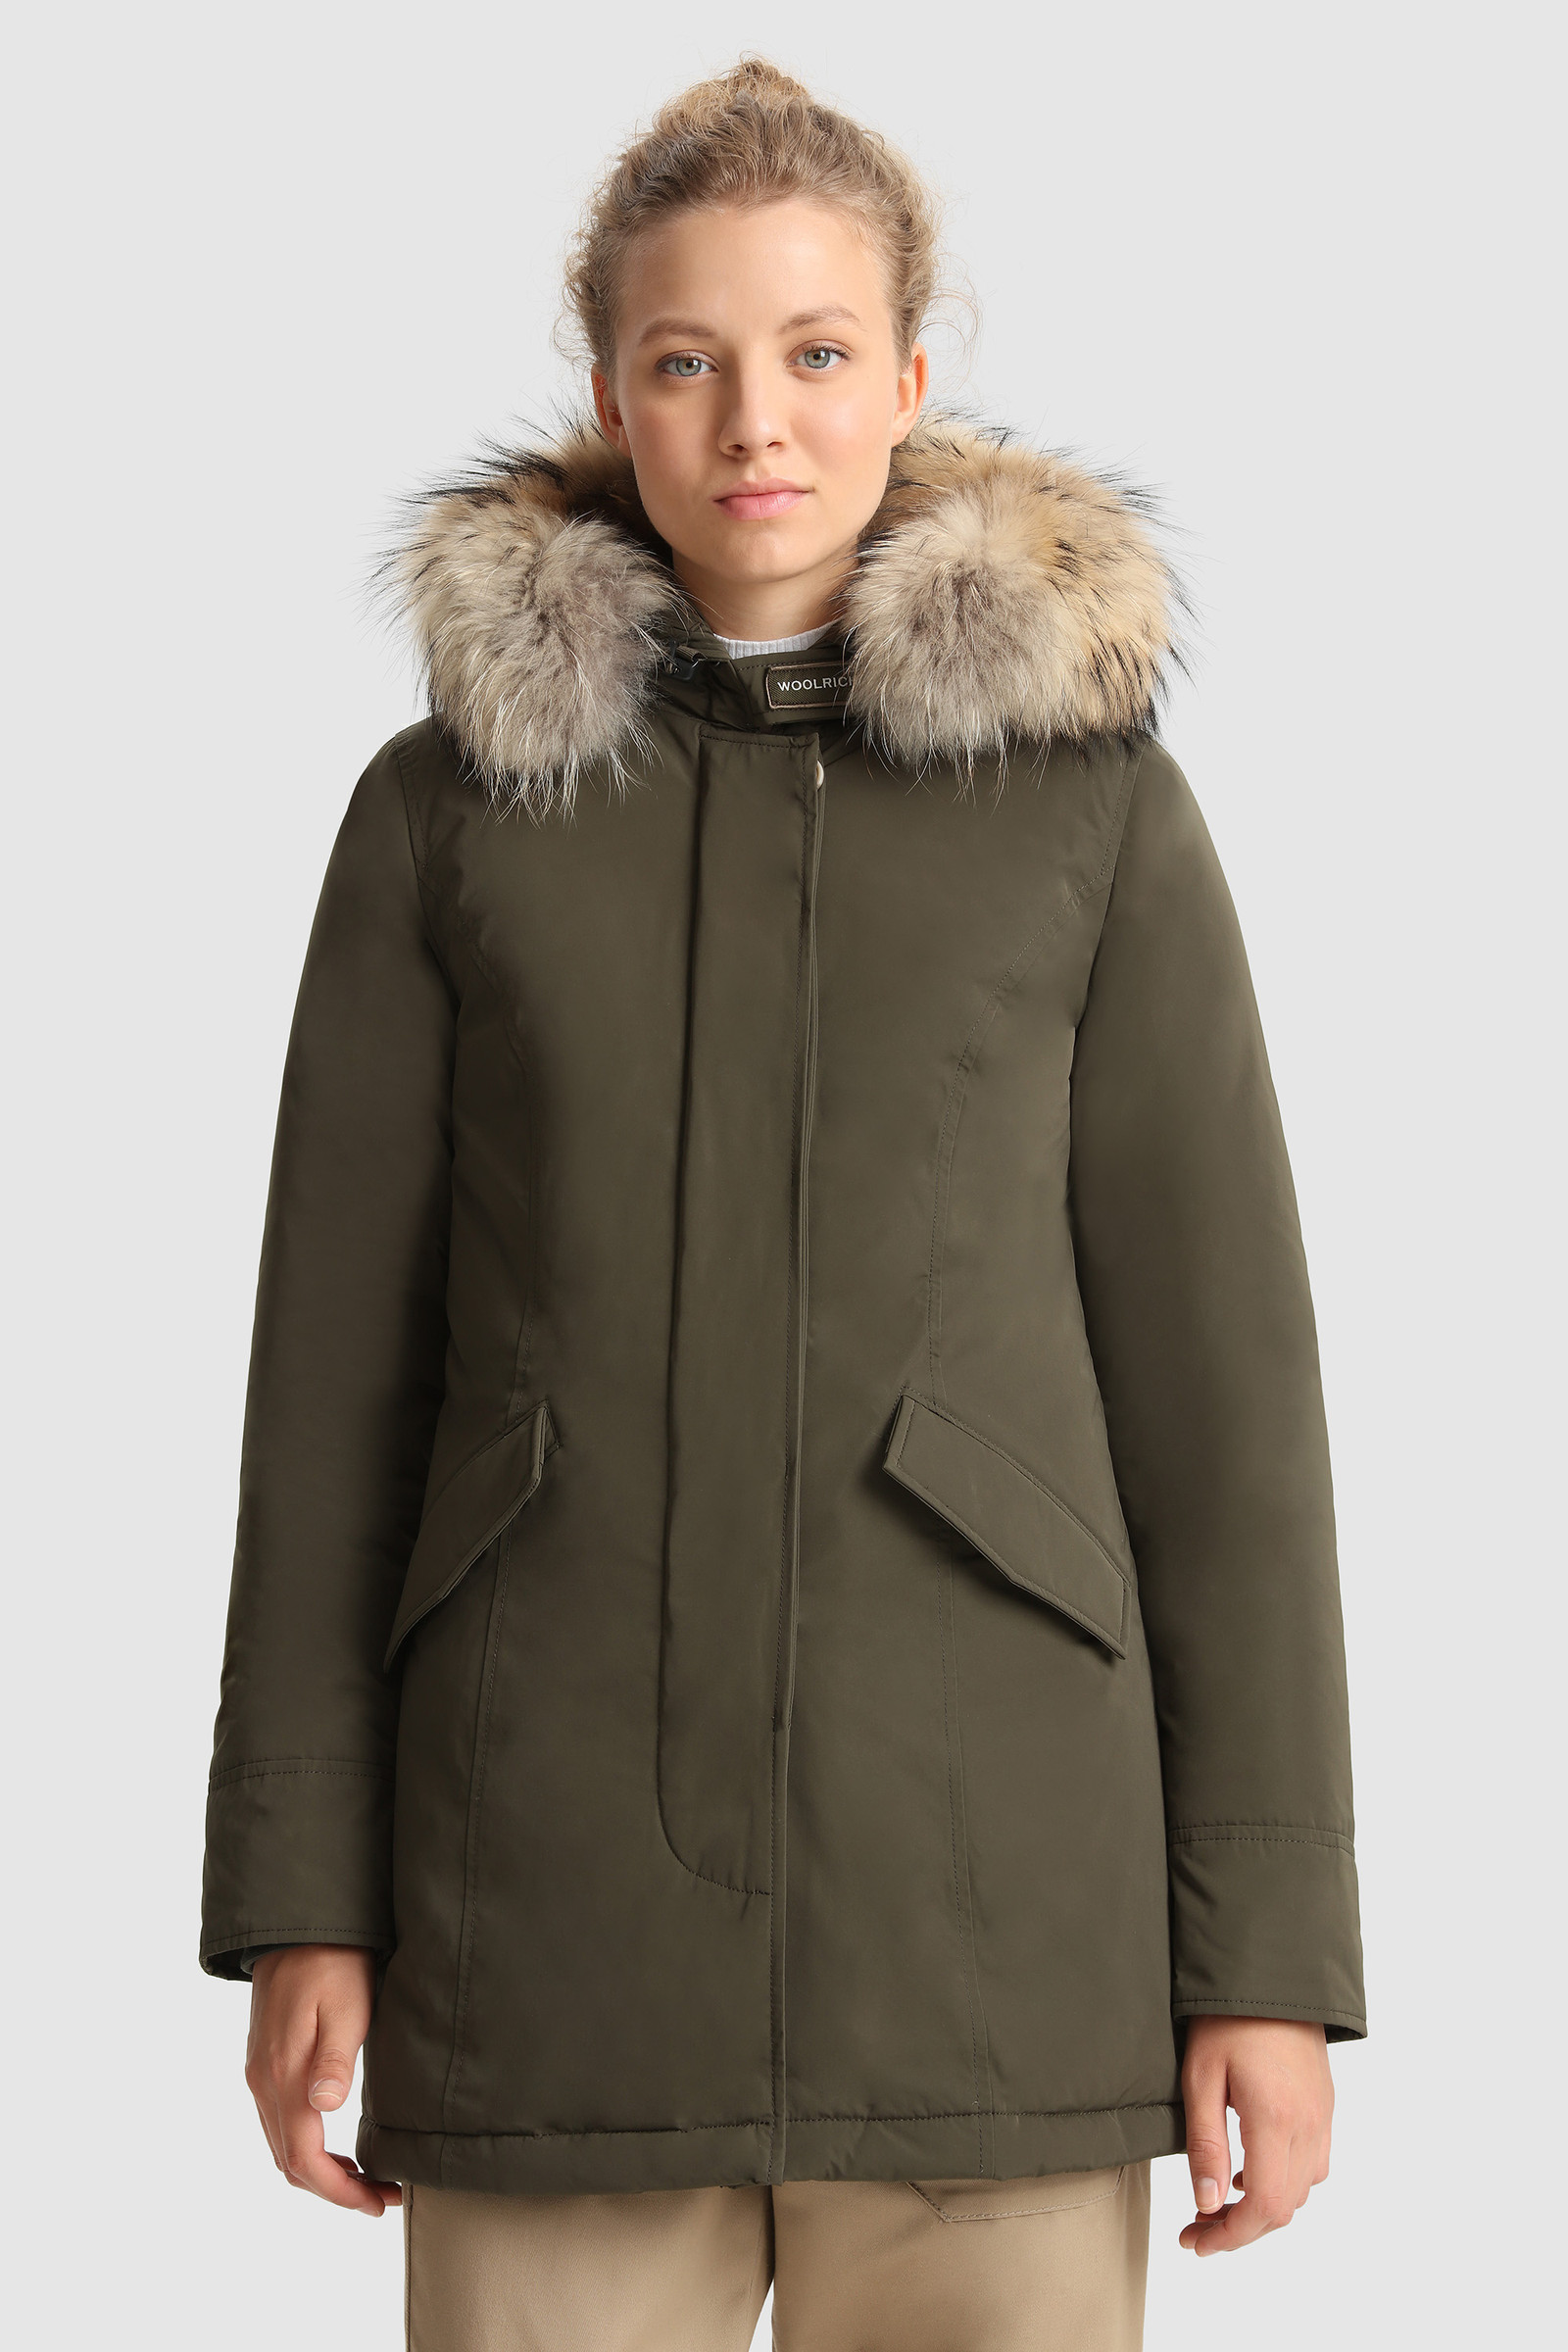 Woolrich Fur artic Racoon Parka in Beige - Save 49% Womens Coats Woolrich Coats Natural 